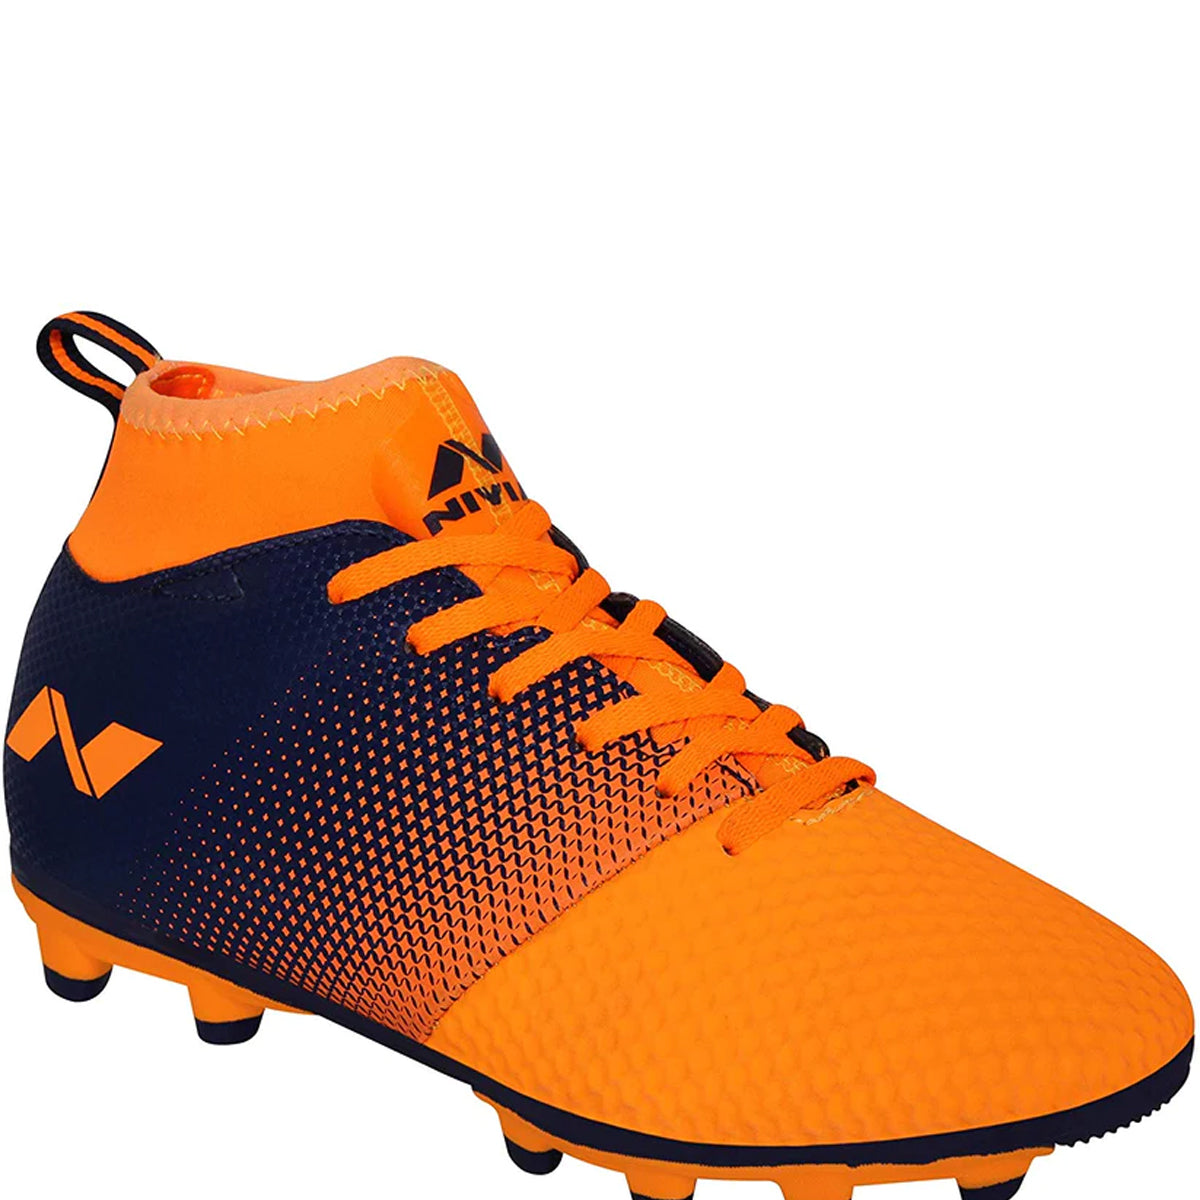 Nivia Ashtang Football Stud - Orange - Best Price online Prokicksports.com